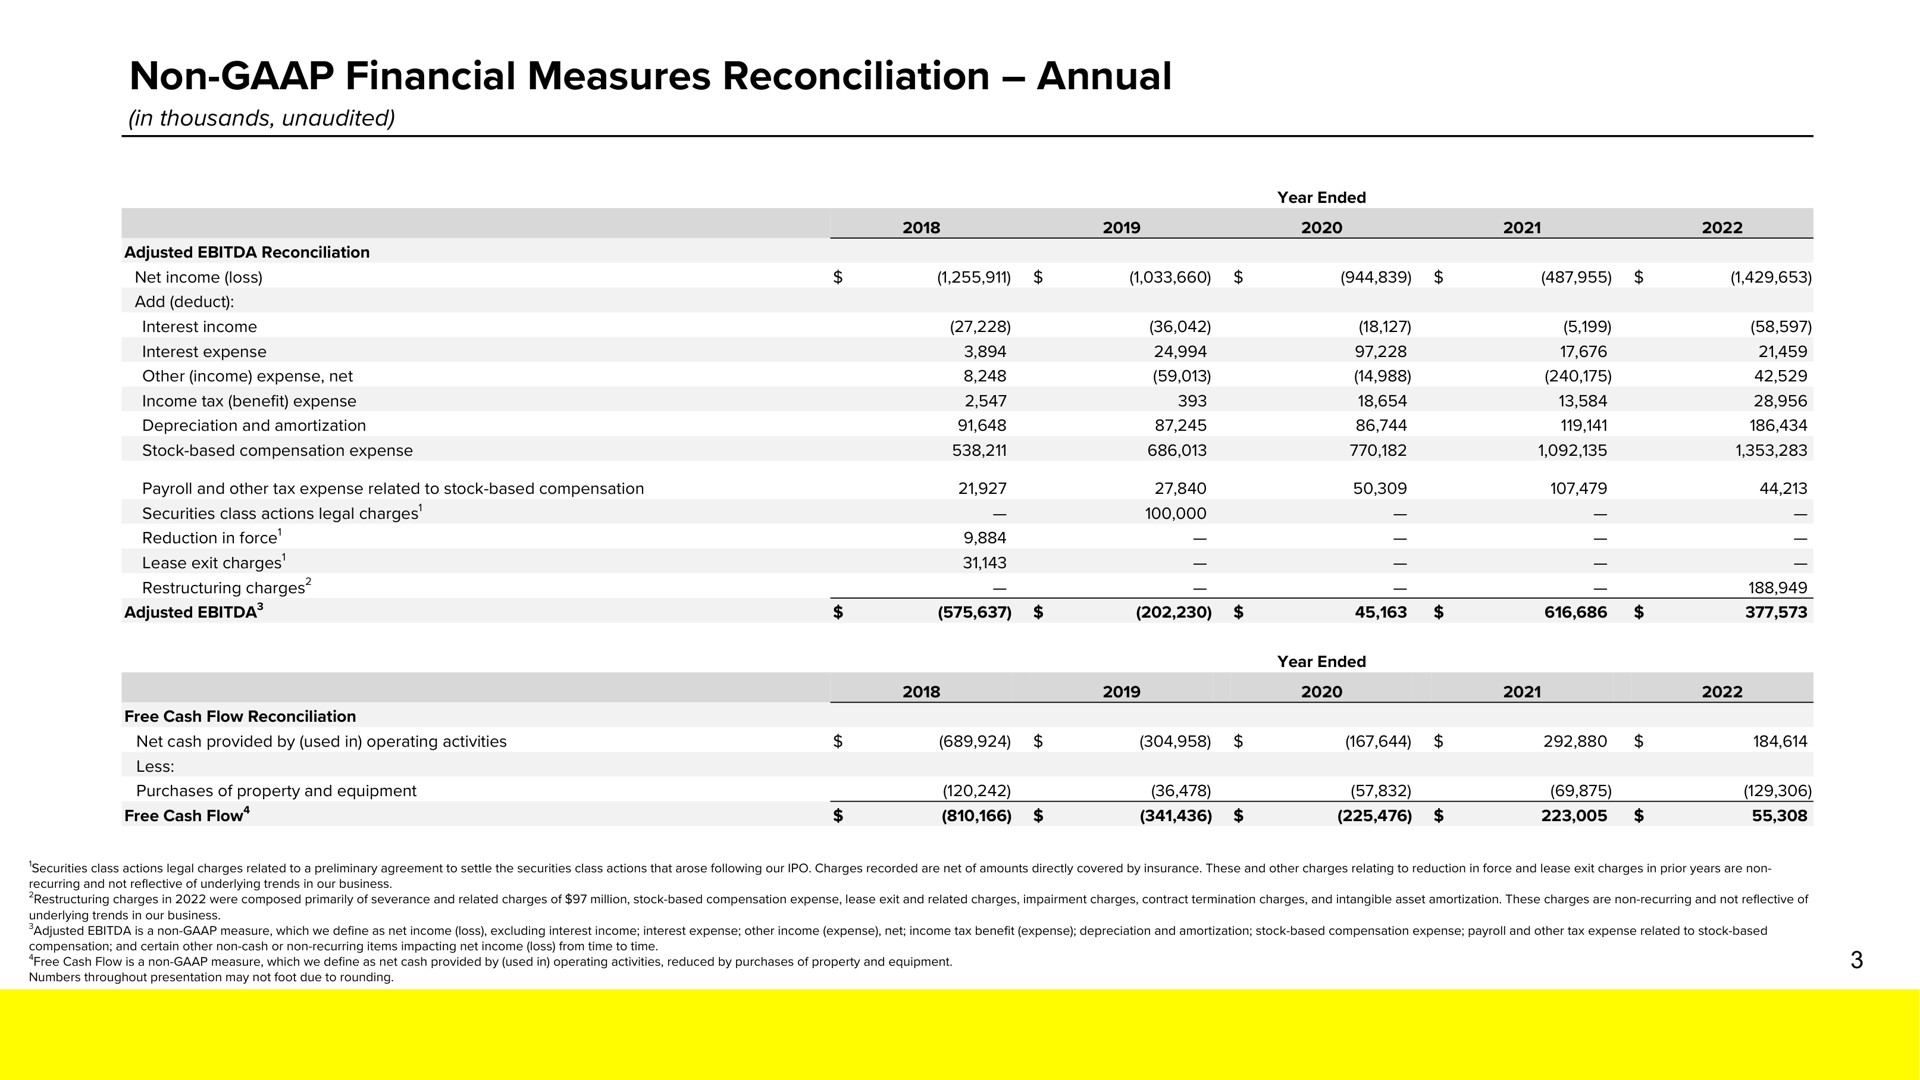 non financial measures reconciliation annual | Snap Inc